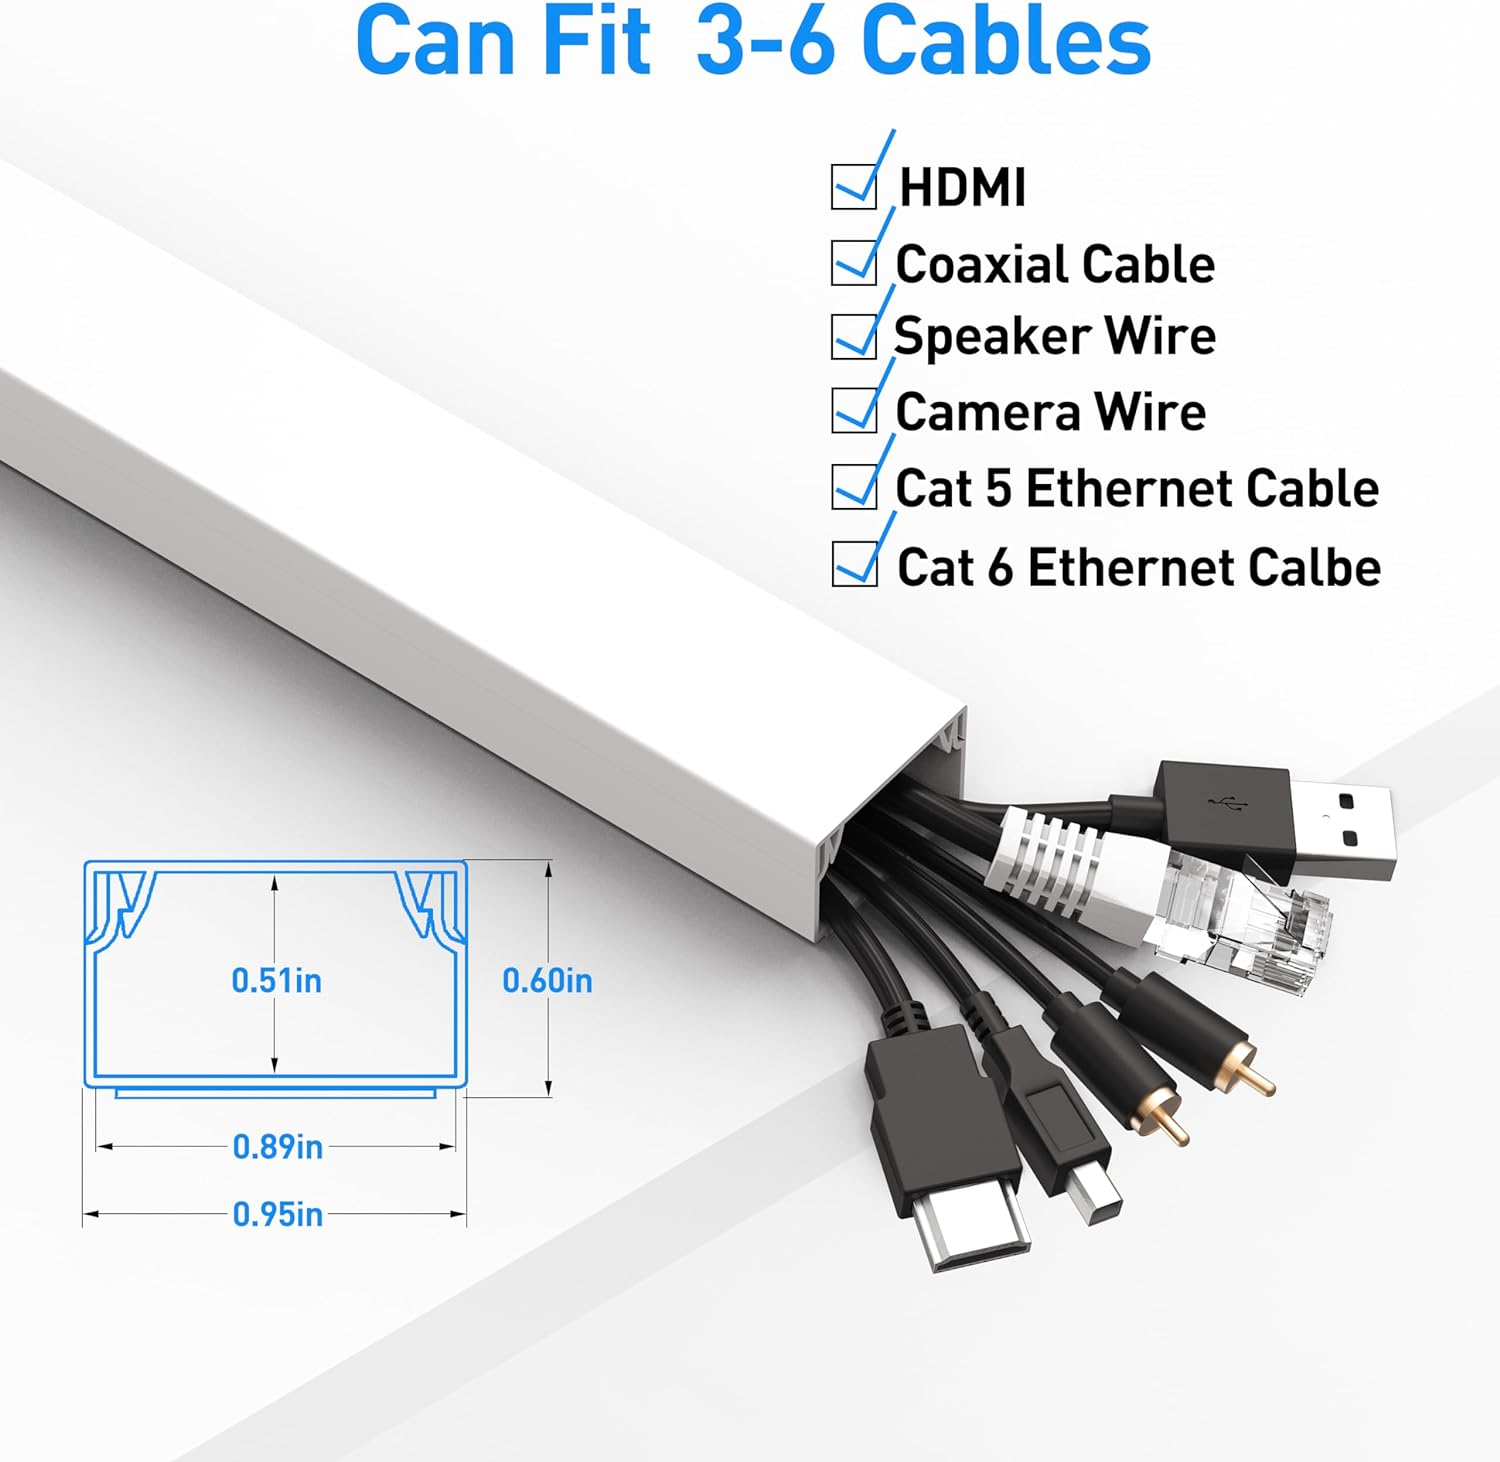 Cable Management Kit